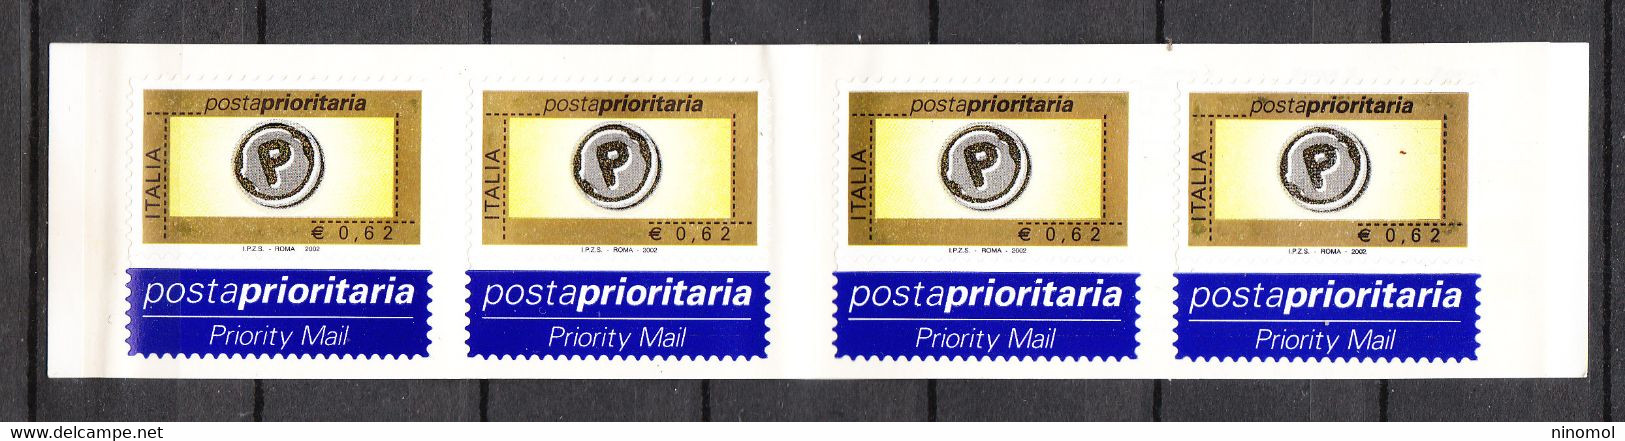 Italia   -   2002.  Carnet Prioritaria 0,62 €. Fresco, MNH - Booklets